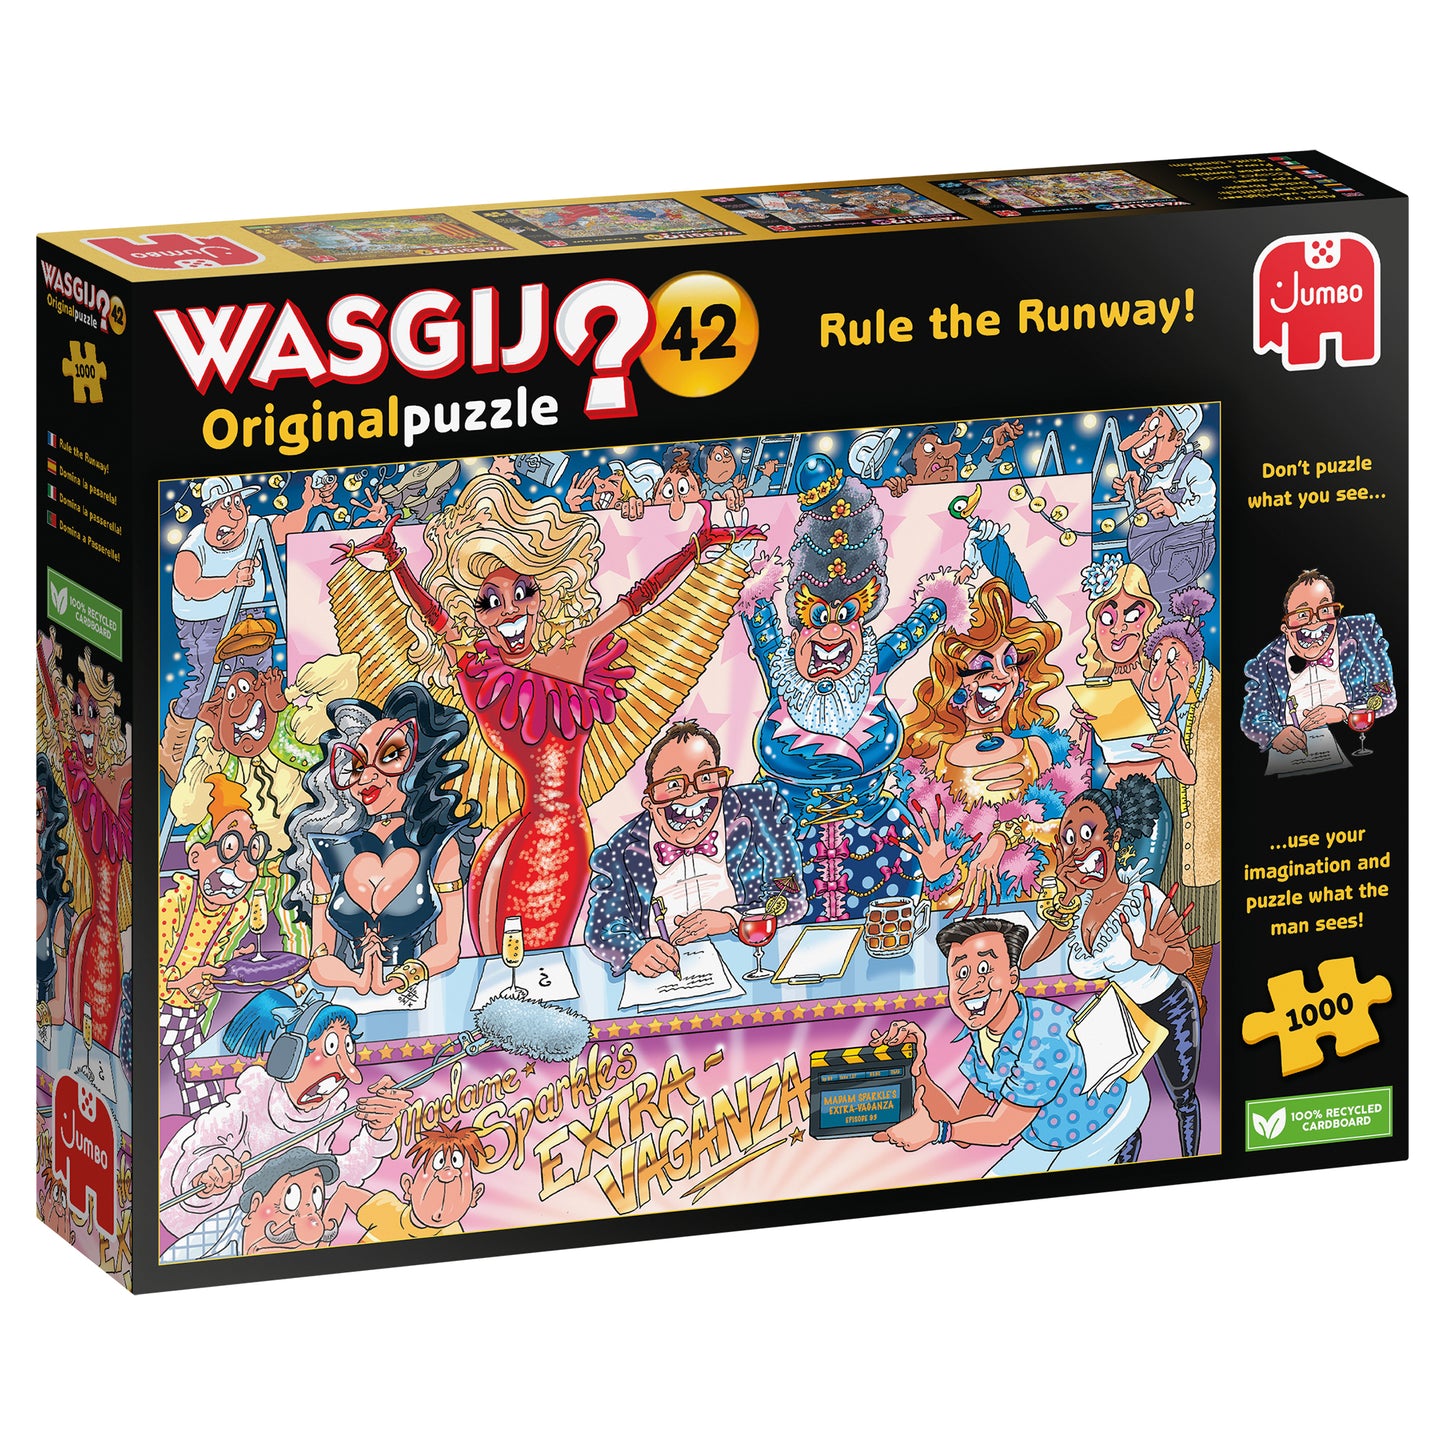 Wasgij Original 42 - Rule the Runway! - 1000 Piece Jigsaw Puzzle